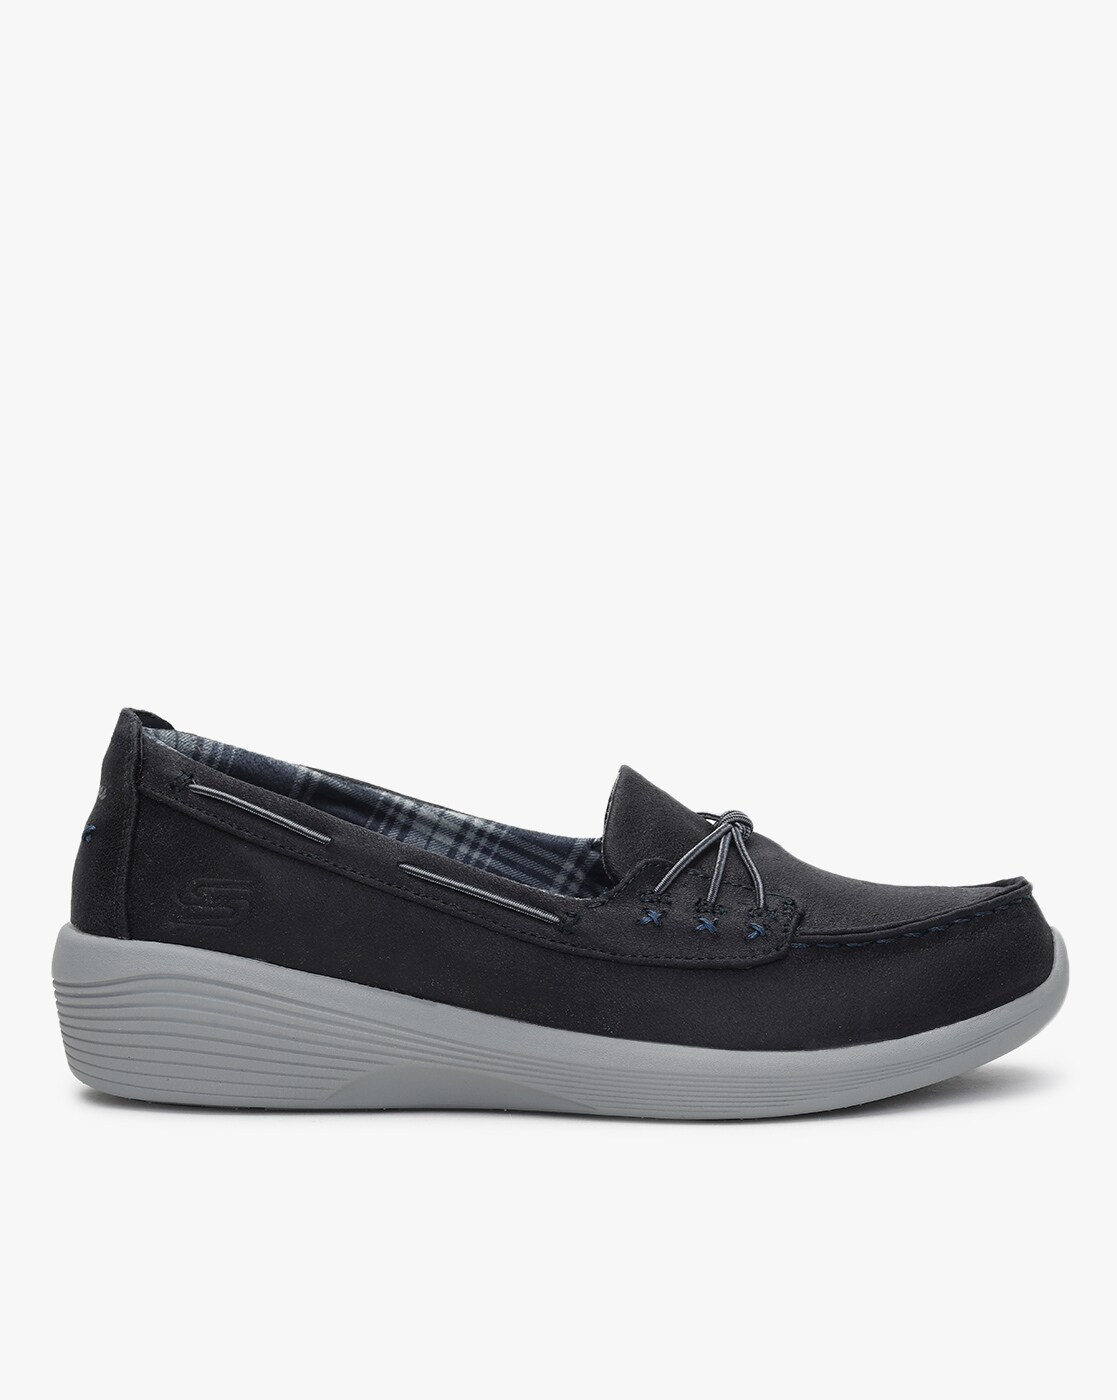 Buy Black Casual Shoes for Online Ajio.com